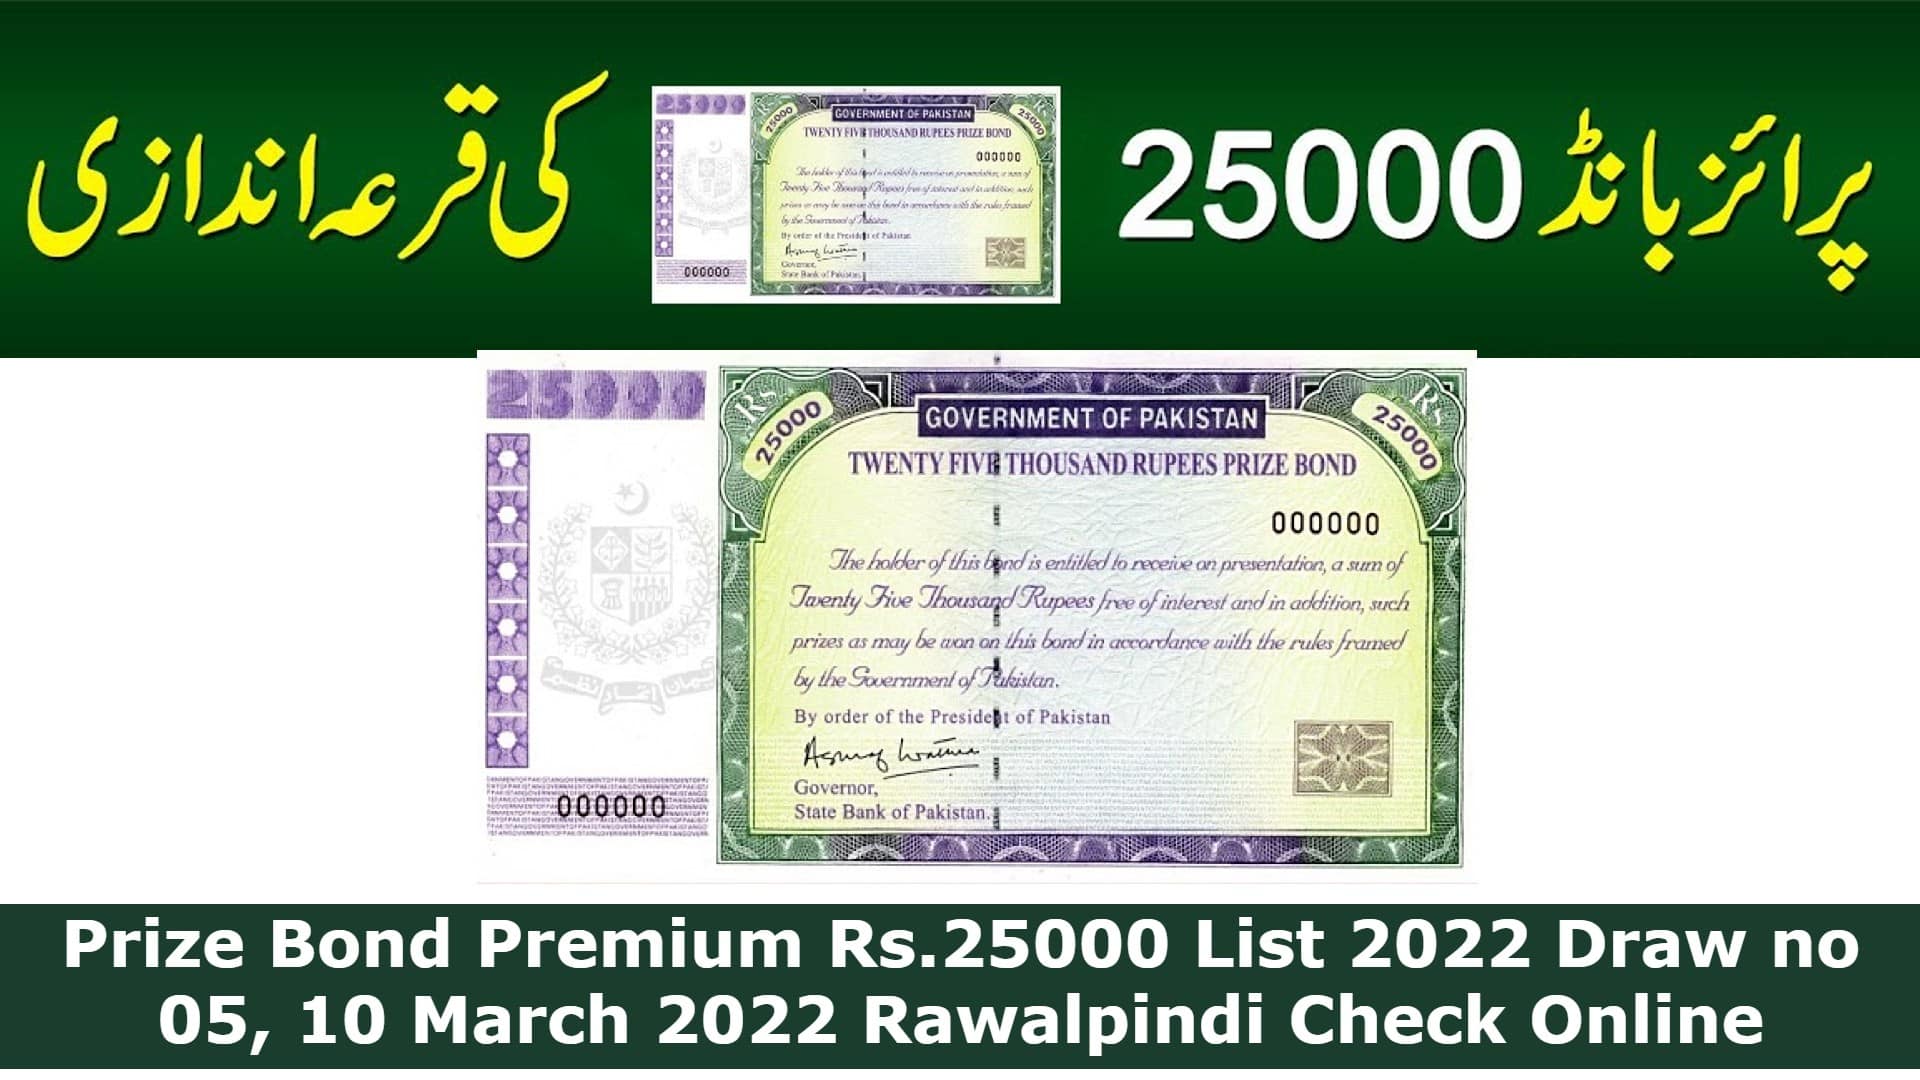 Prize Bond Premium Rs.25000 List 2022 Draw no 05, 10 March 2022 Rawalpindi Check Online